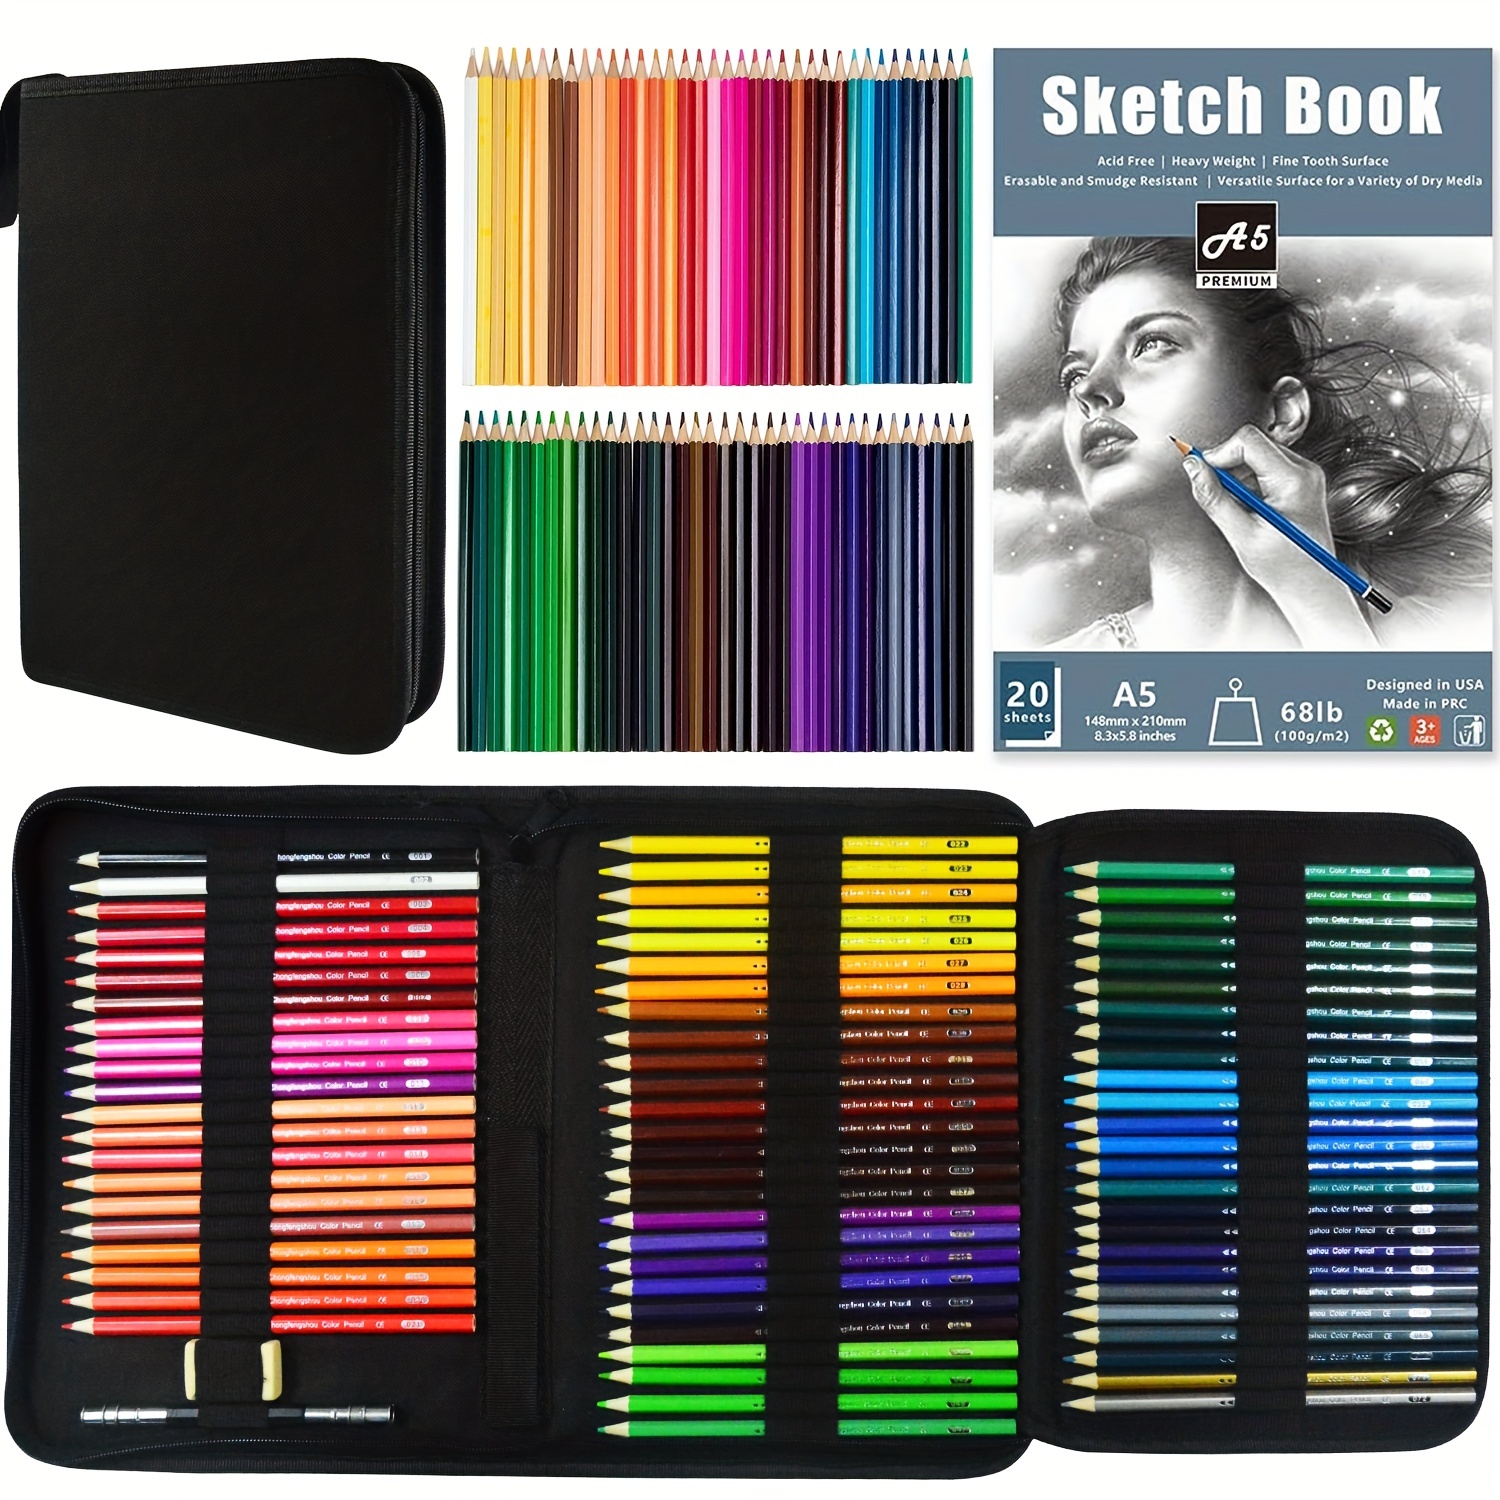 Colors/72 Color Colored Pencil Adult Coloring Book Soft Core